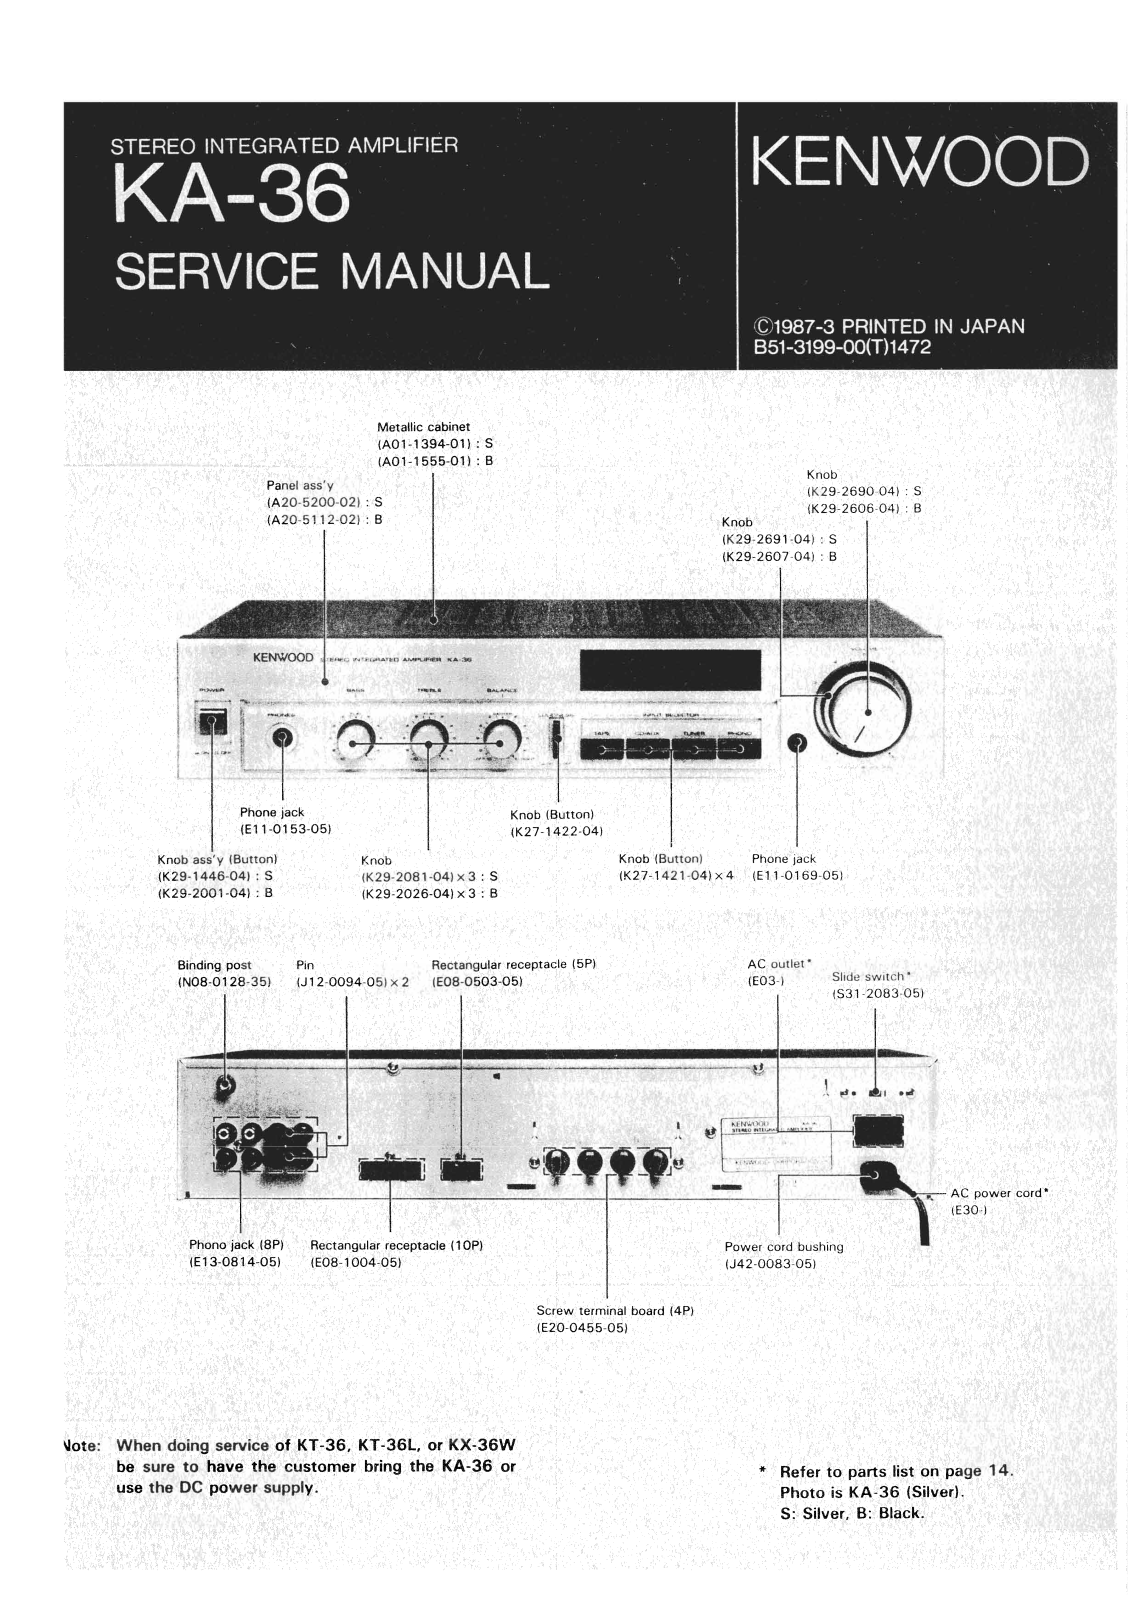 Kenwood KA-36 Service Manual